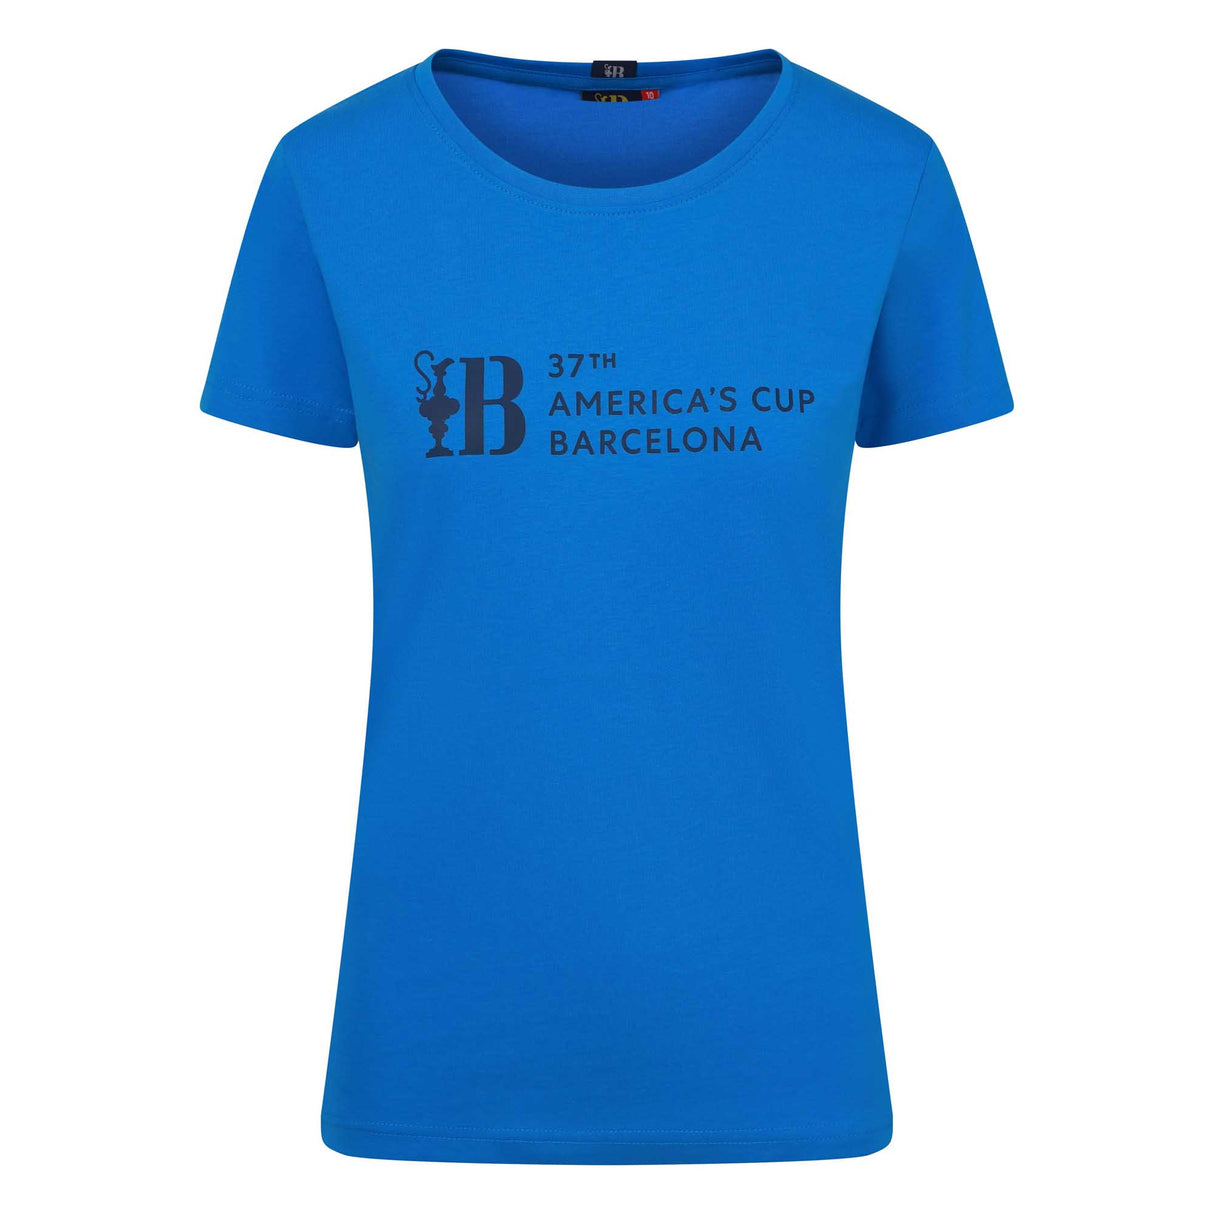 37th America's Cup Women's Logo T-Shirt